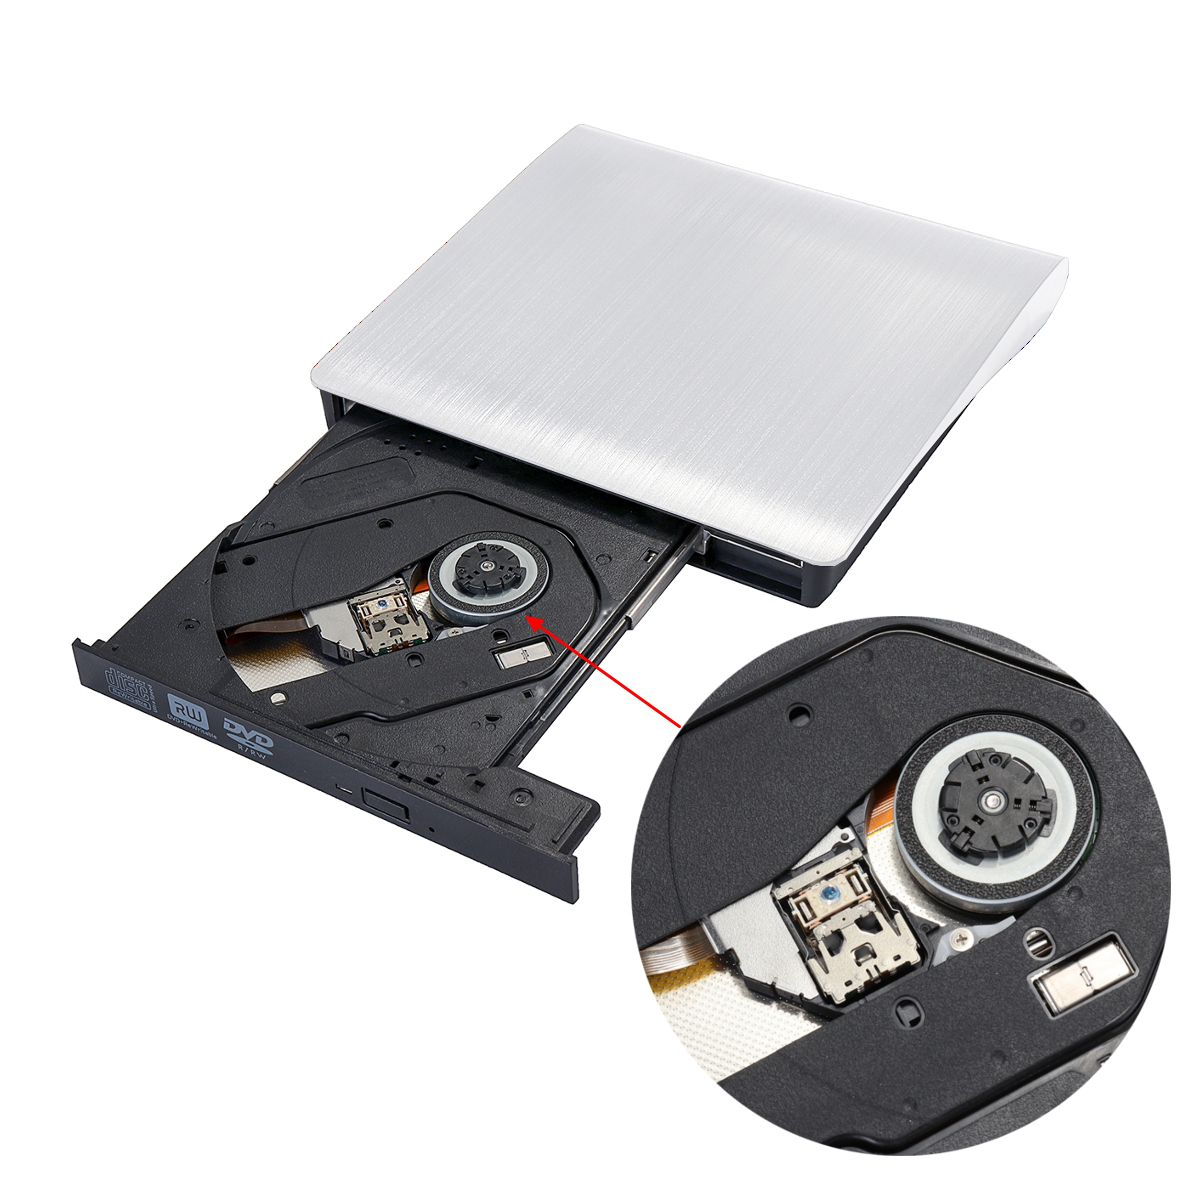 USB 3.0 Slim External DVD Optical Drive DVD-RW CD-RW Combo Drive Burner Reader Player 11